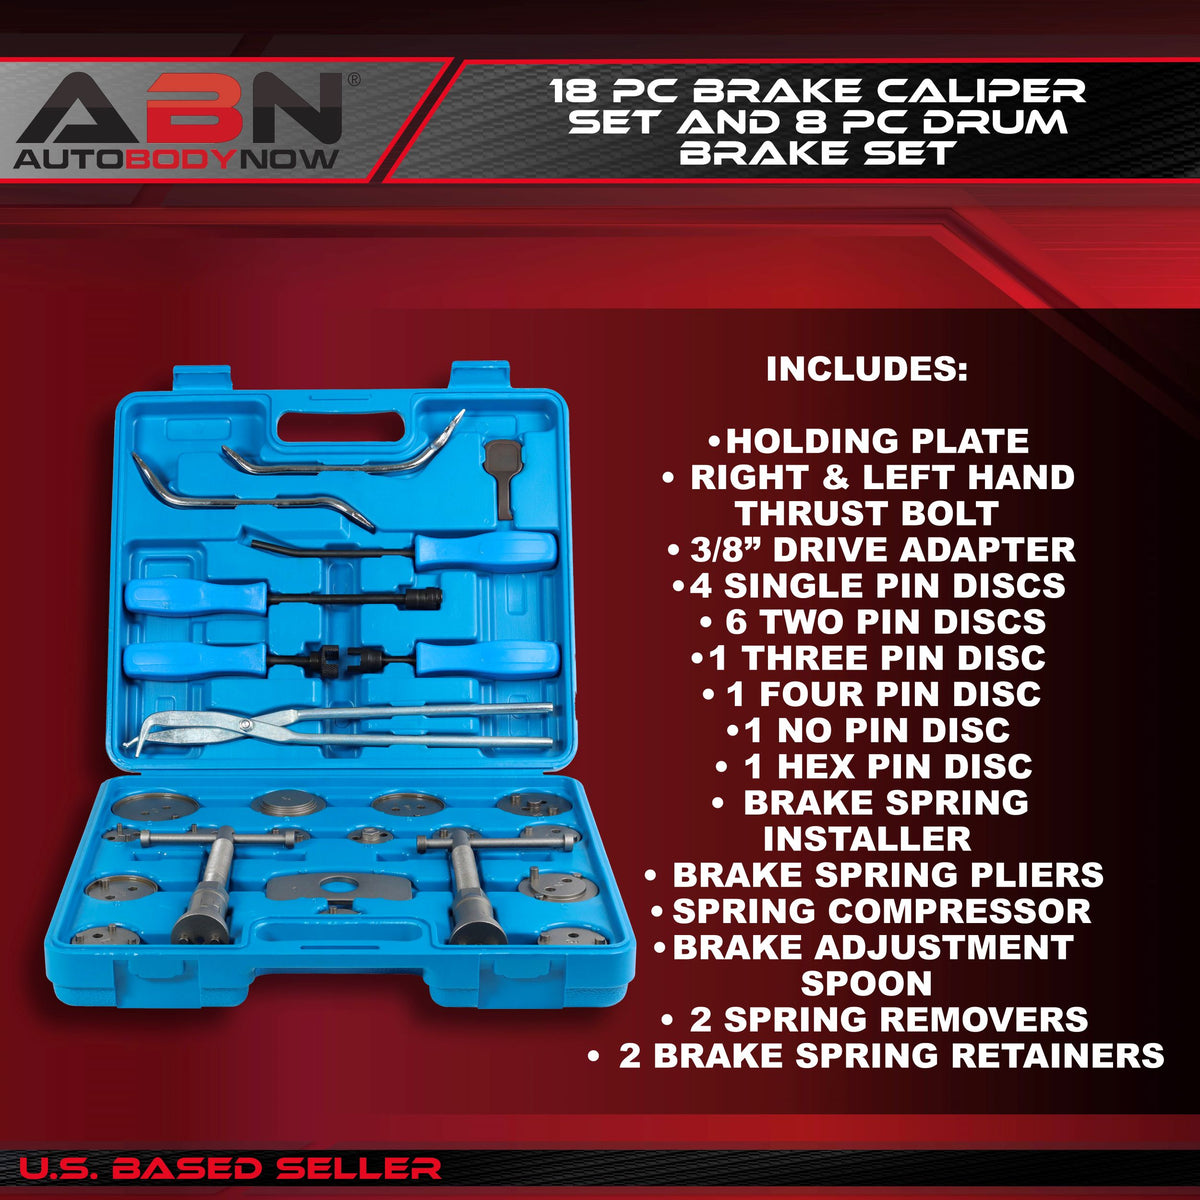 Brake Tool Sets w/ 18 Pc Brake Caliper Set & 8 Pc Brake Tool Set